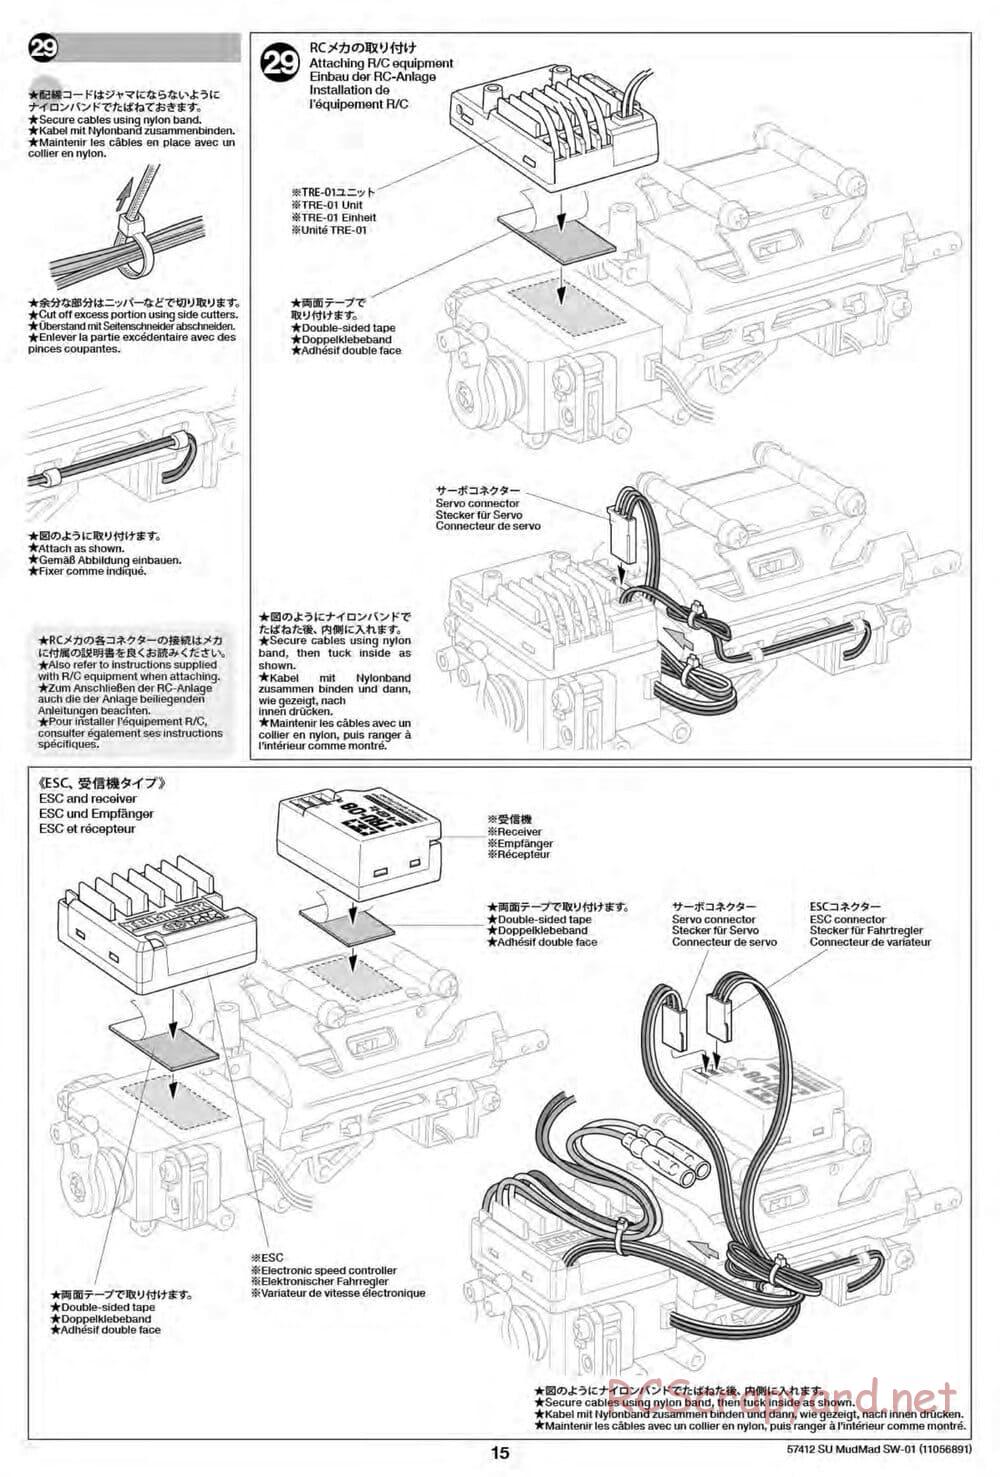 Tamiya - MudMad - SW-01 Chassis - Manual - Page 15